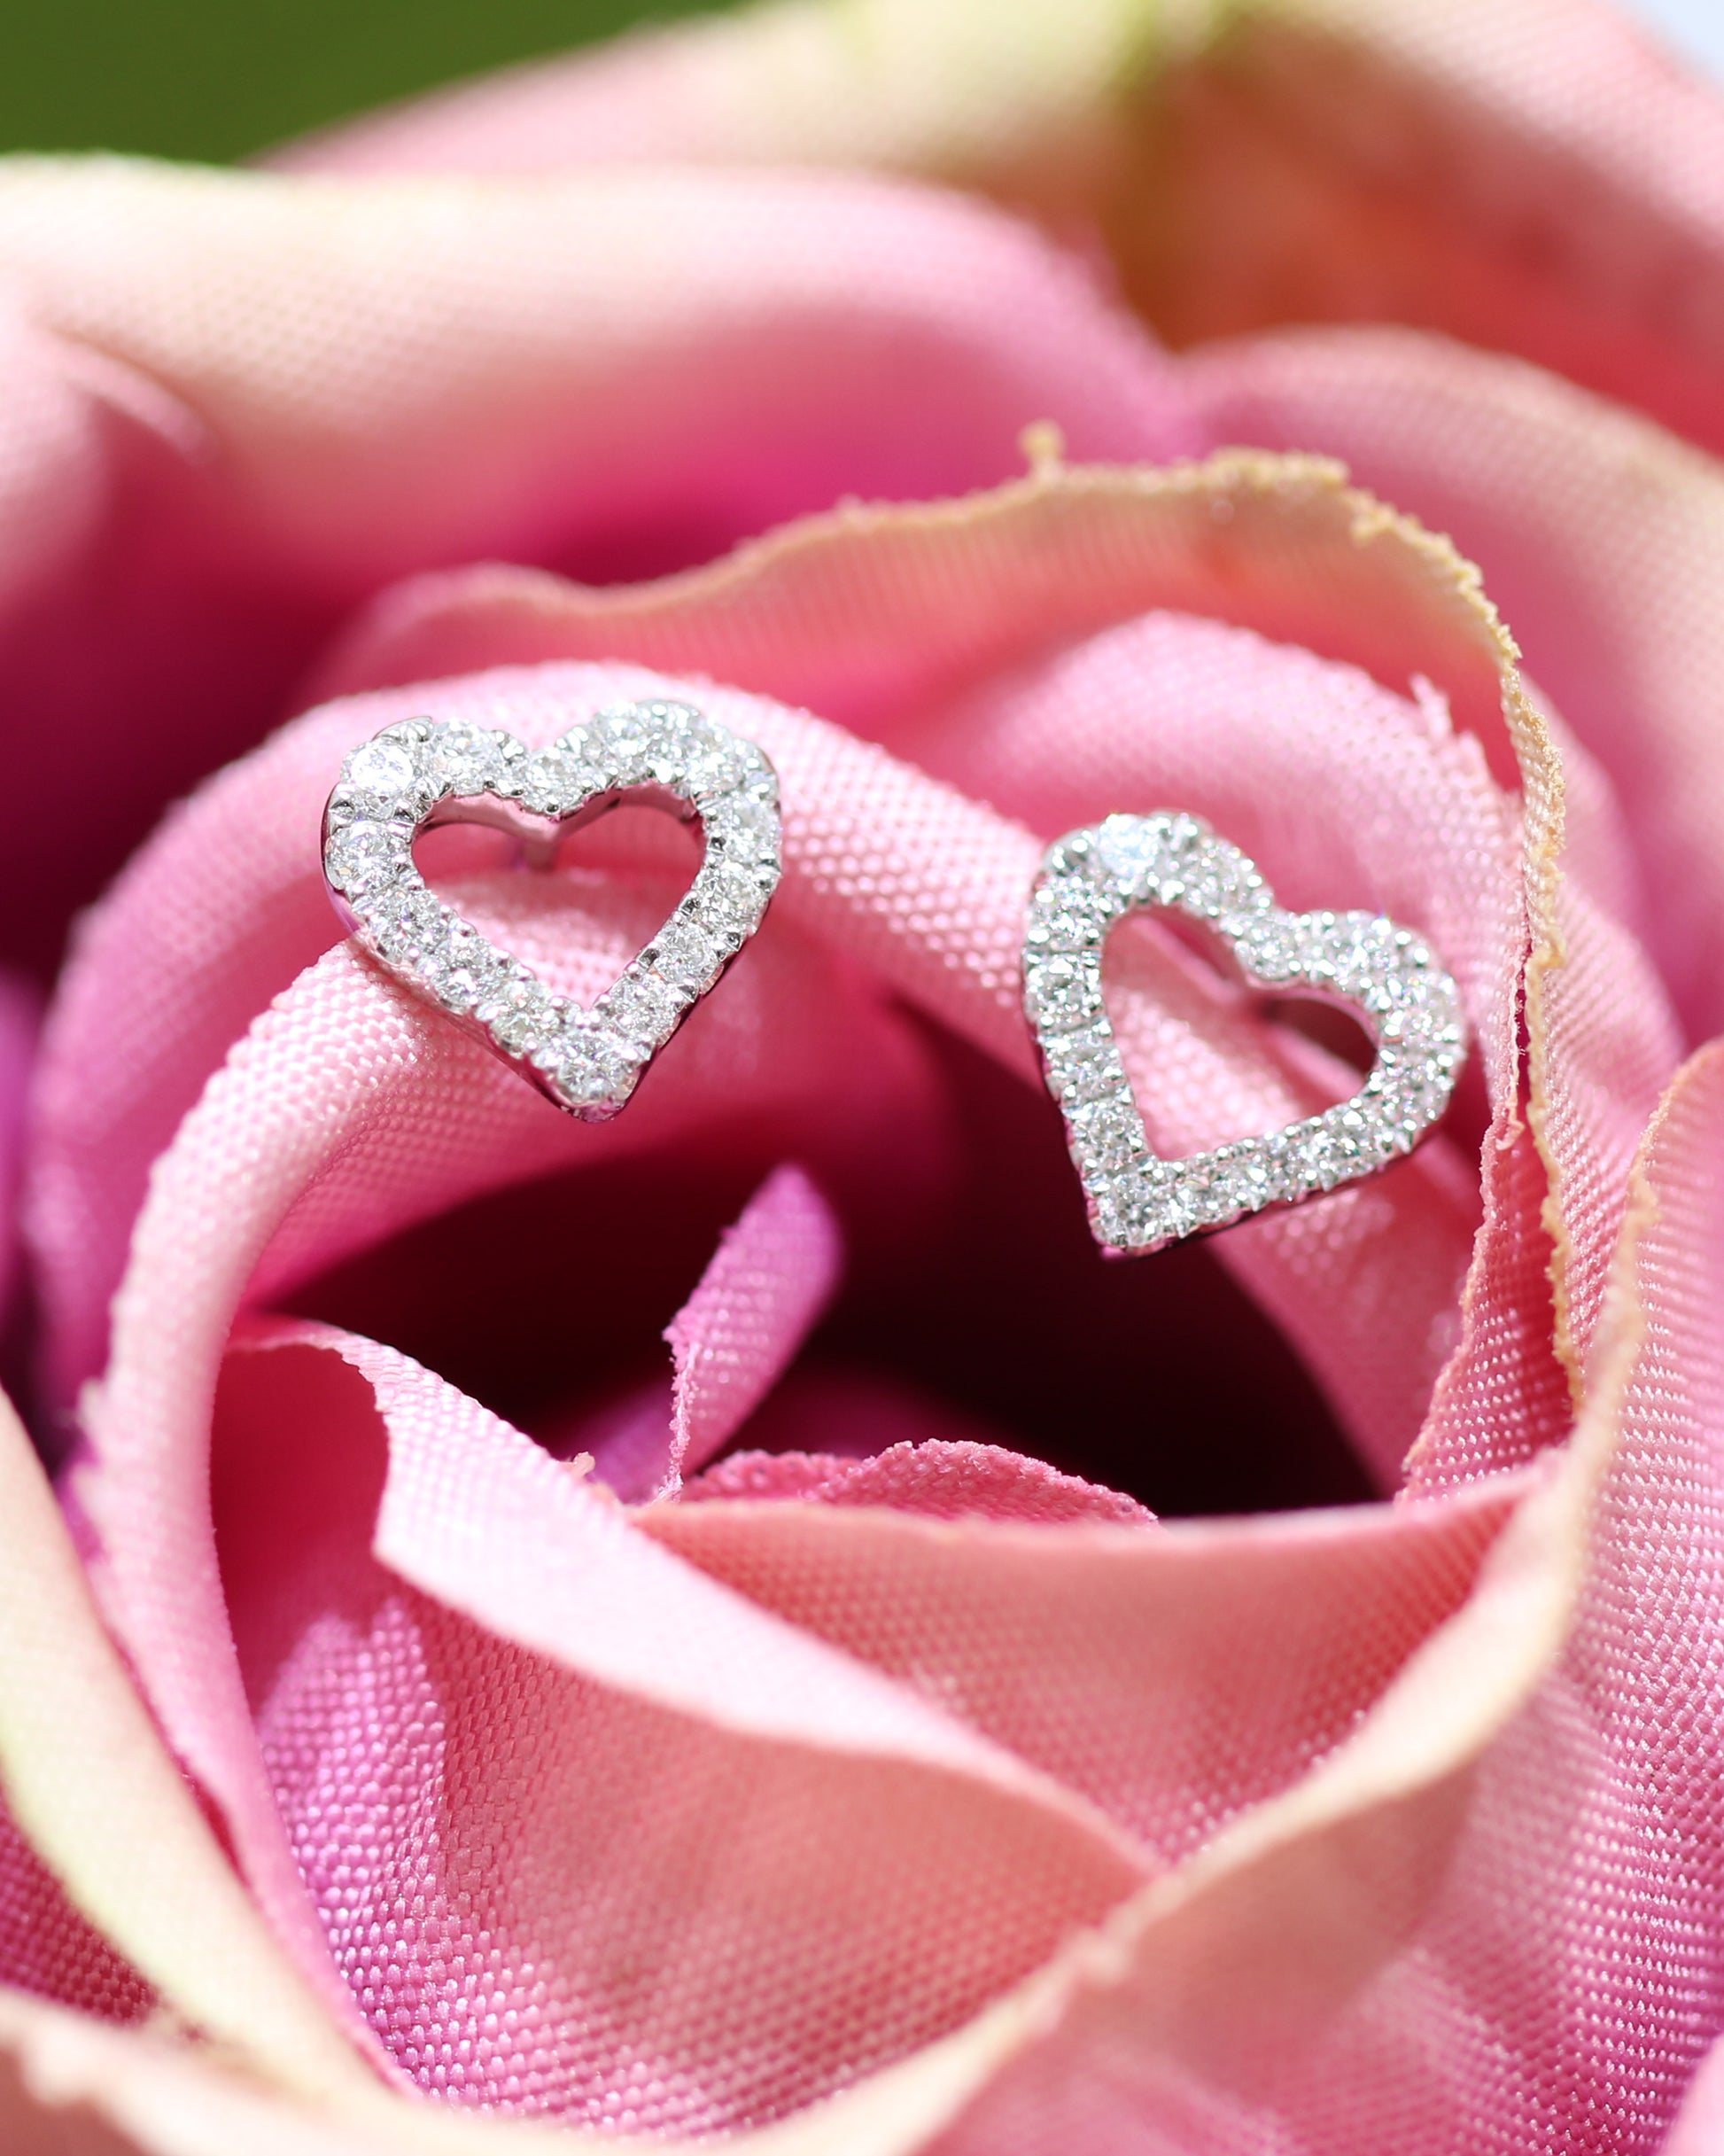 18k白金縷空心形鑽石耳環 18k White Gold 0.13ct Heart Shape Diamond Earrings